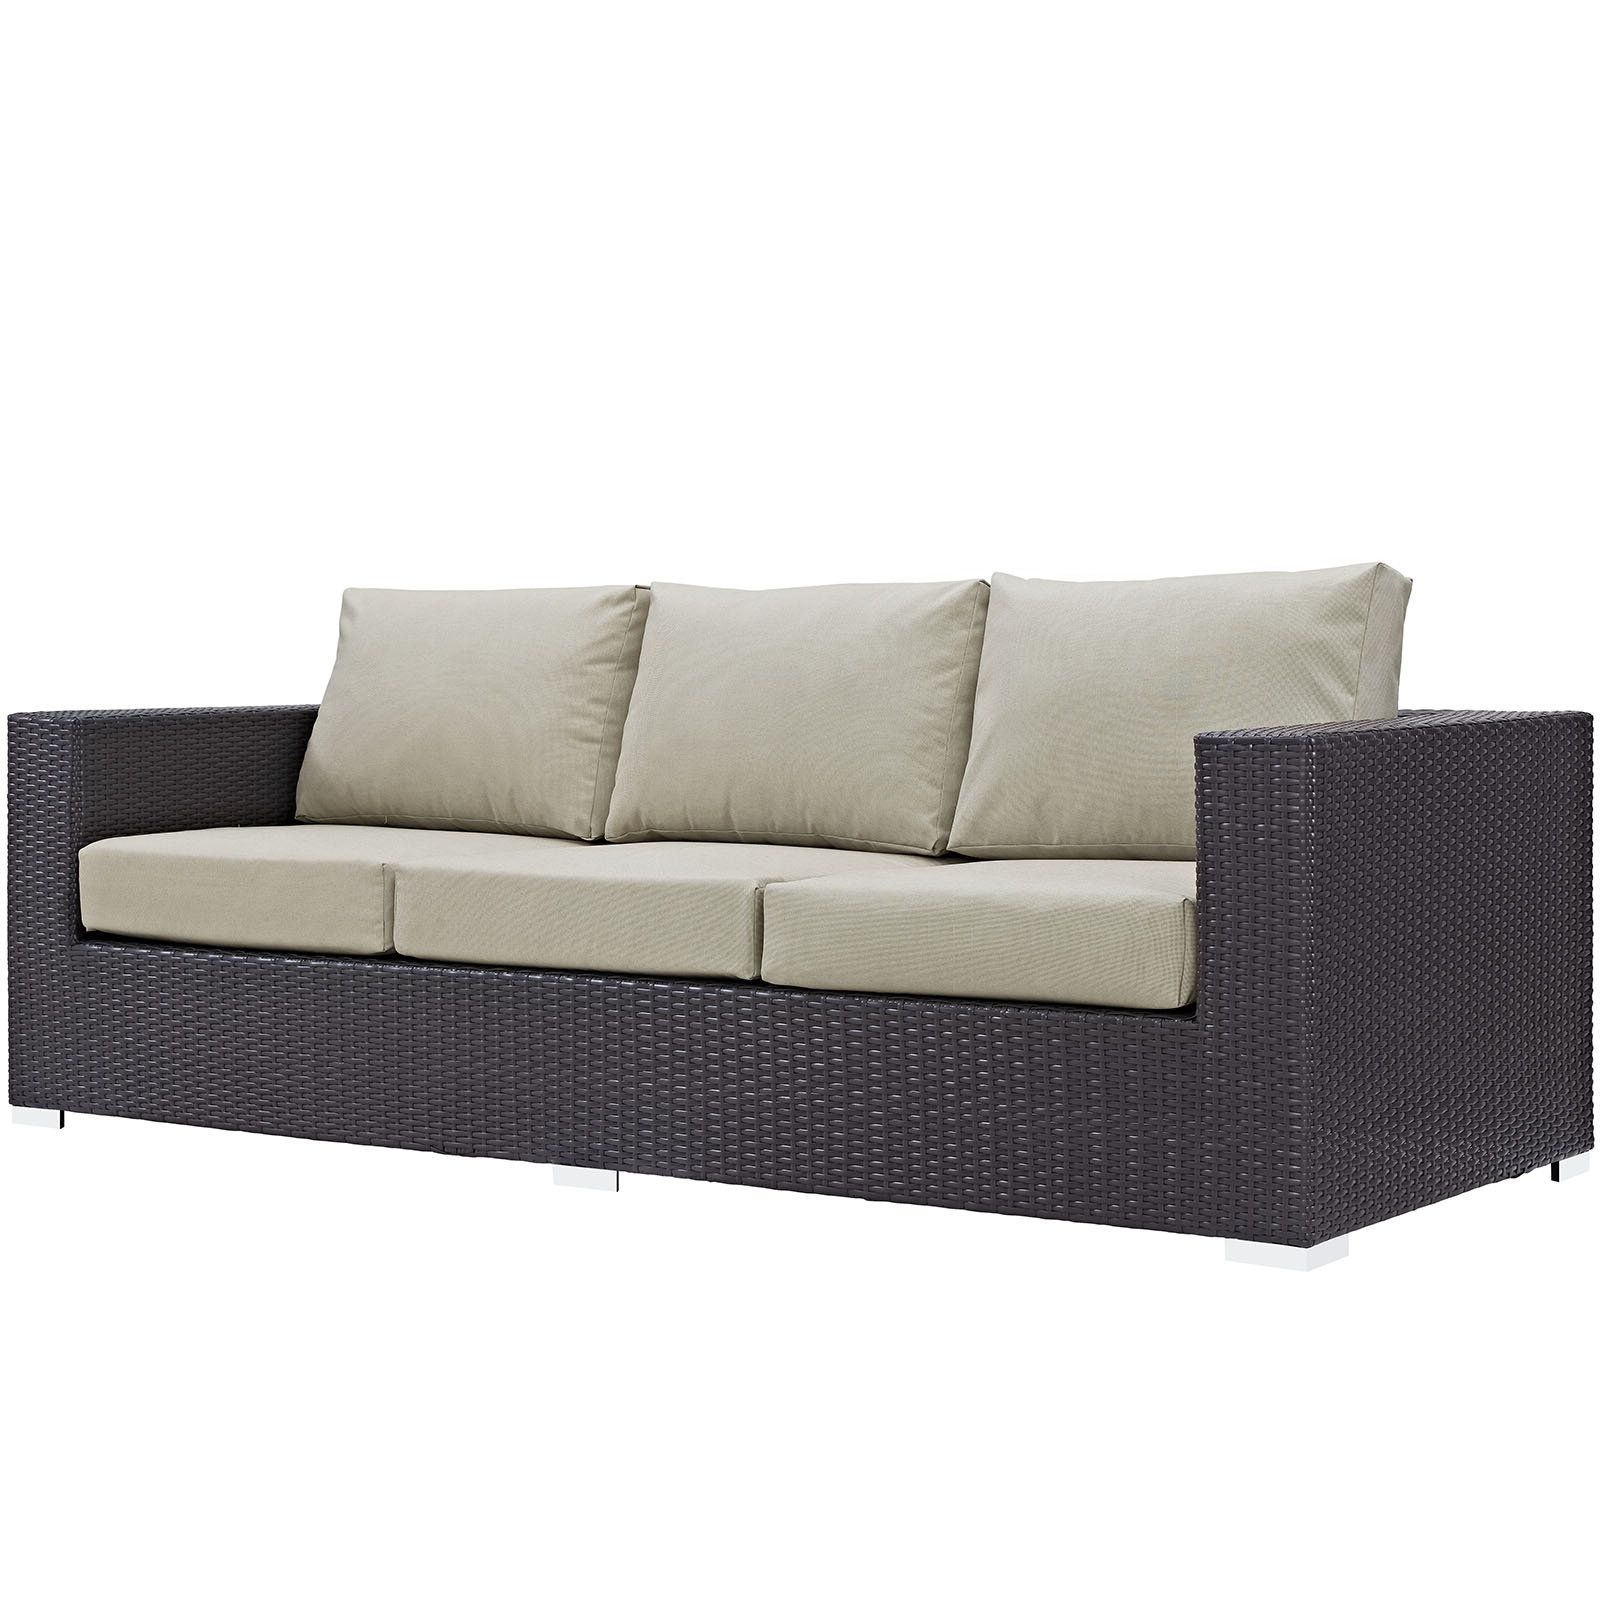 Brentwood Patio Sofa With Cushions Regarding Trendy Belton Patio Sofas With Cushions (Photo 4 of 25)